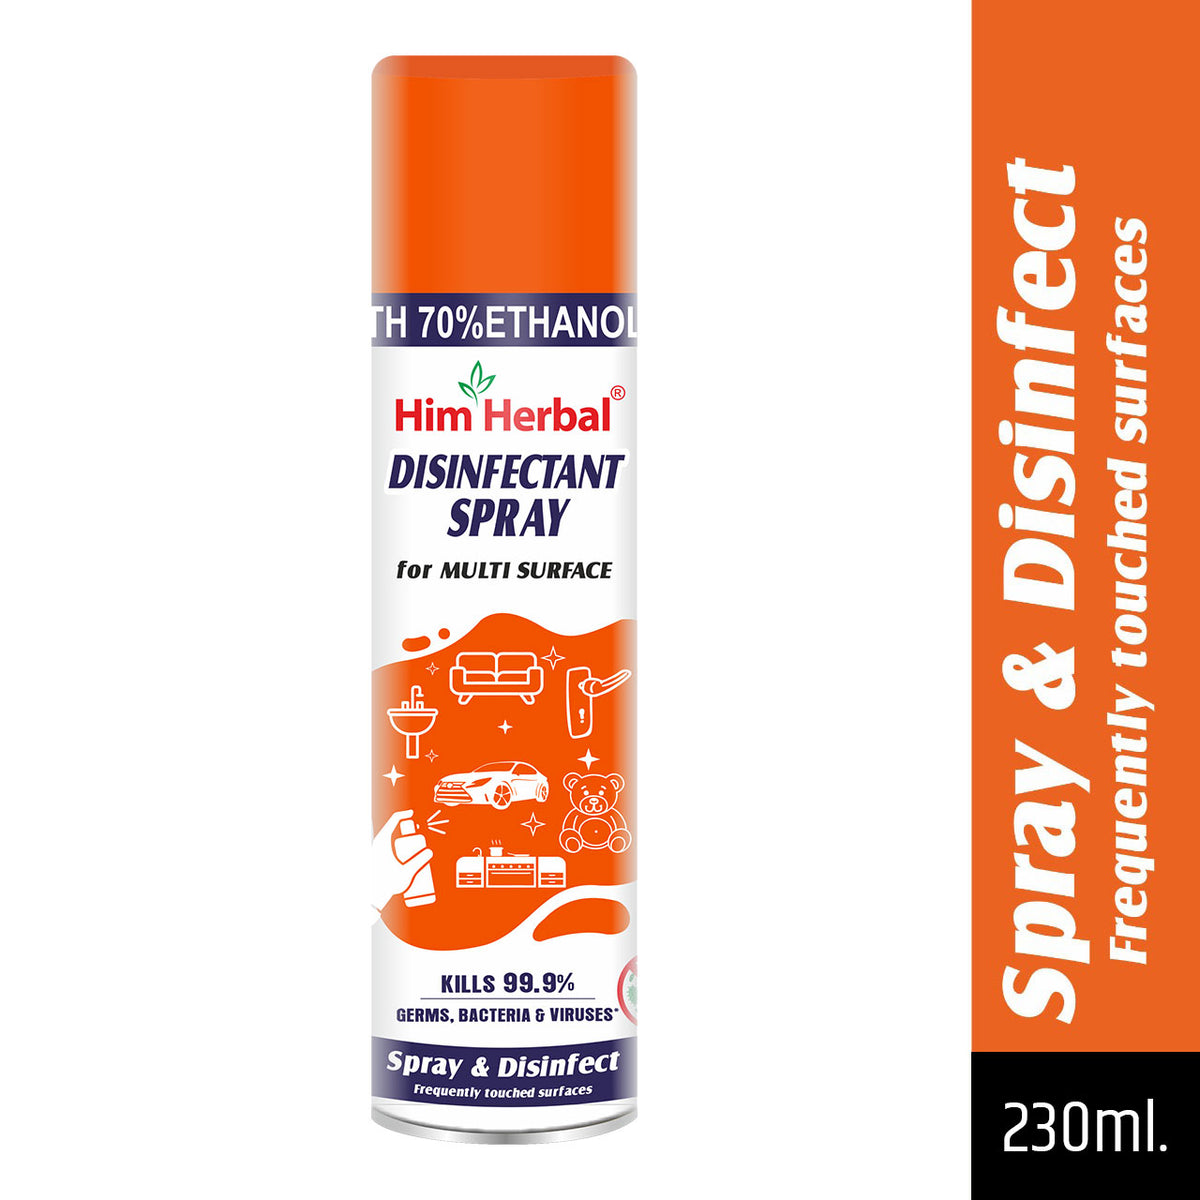 Him Herbal Multi Surface Disinfectant Spray - 230ml | Kills 99.9% Germs, Bacteria & Viruses with 4 Ayurvedic Herbs